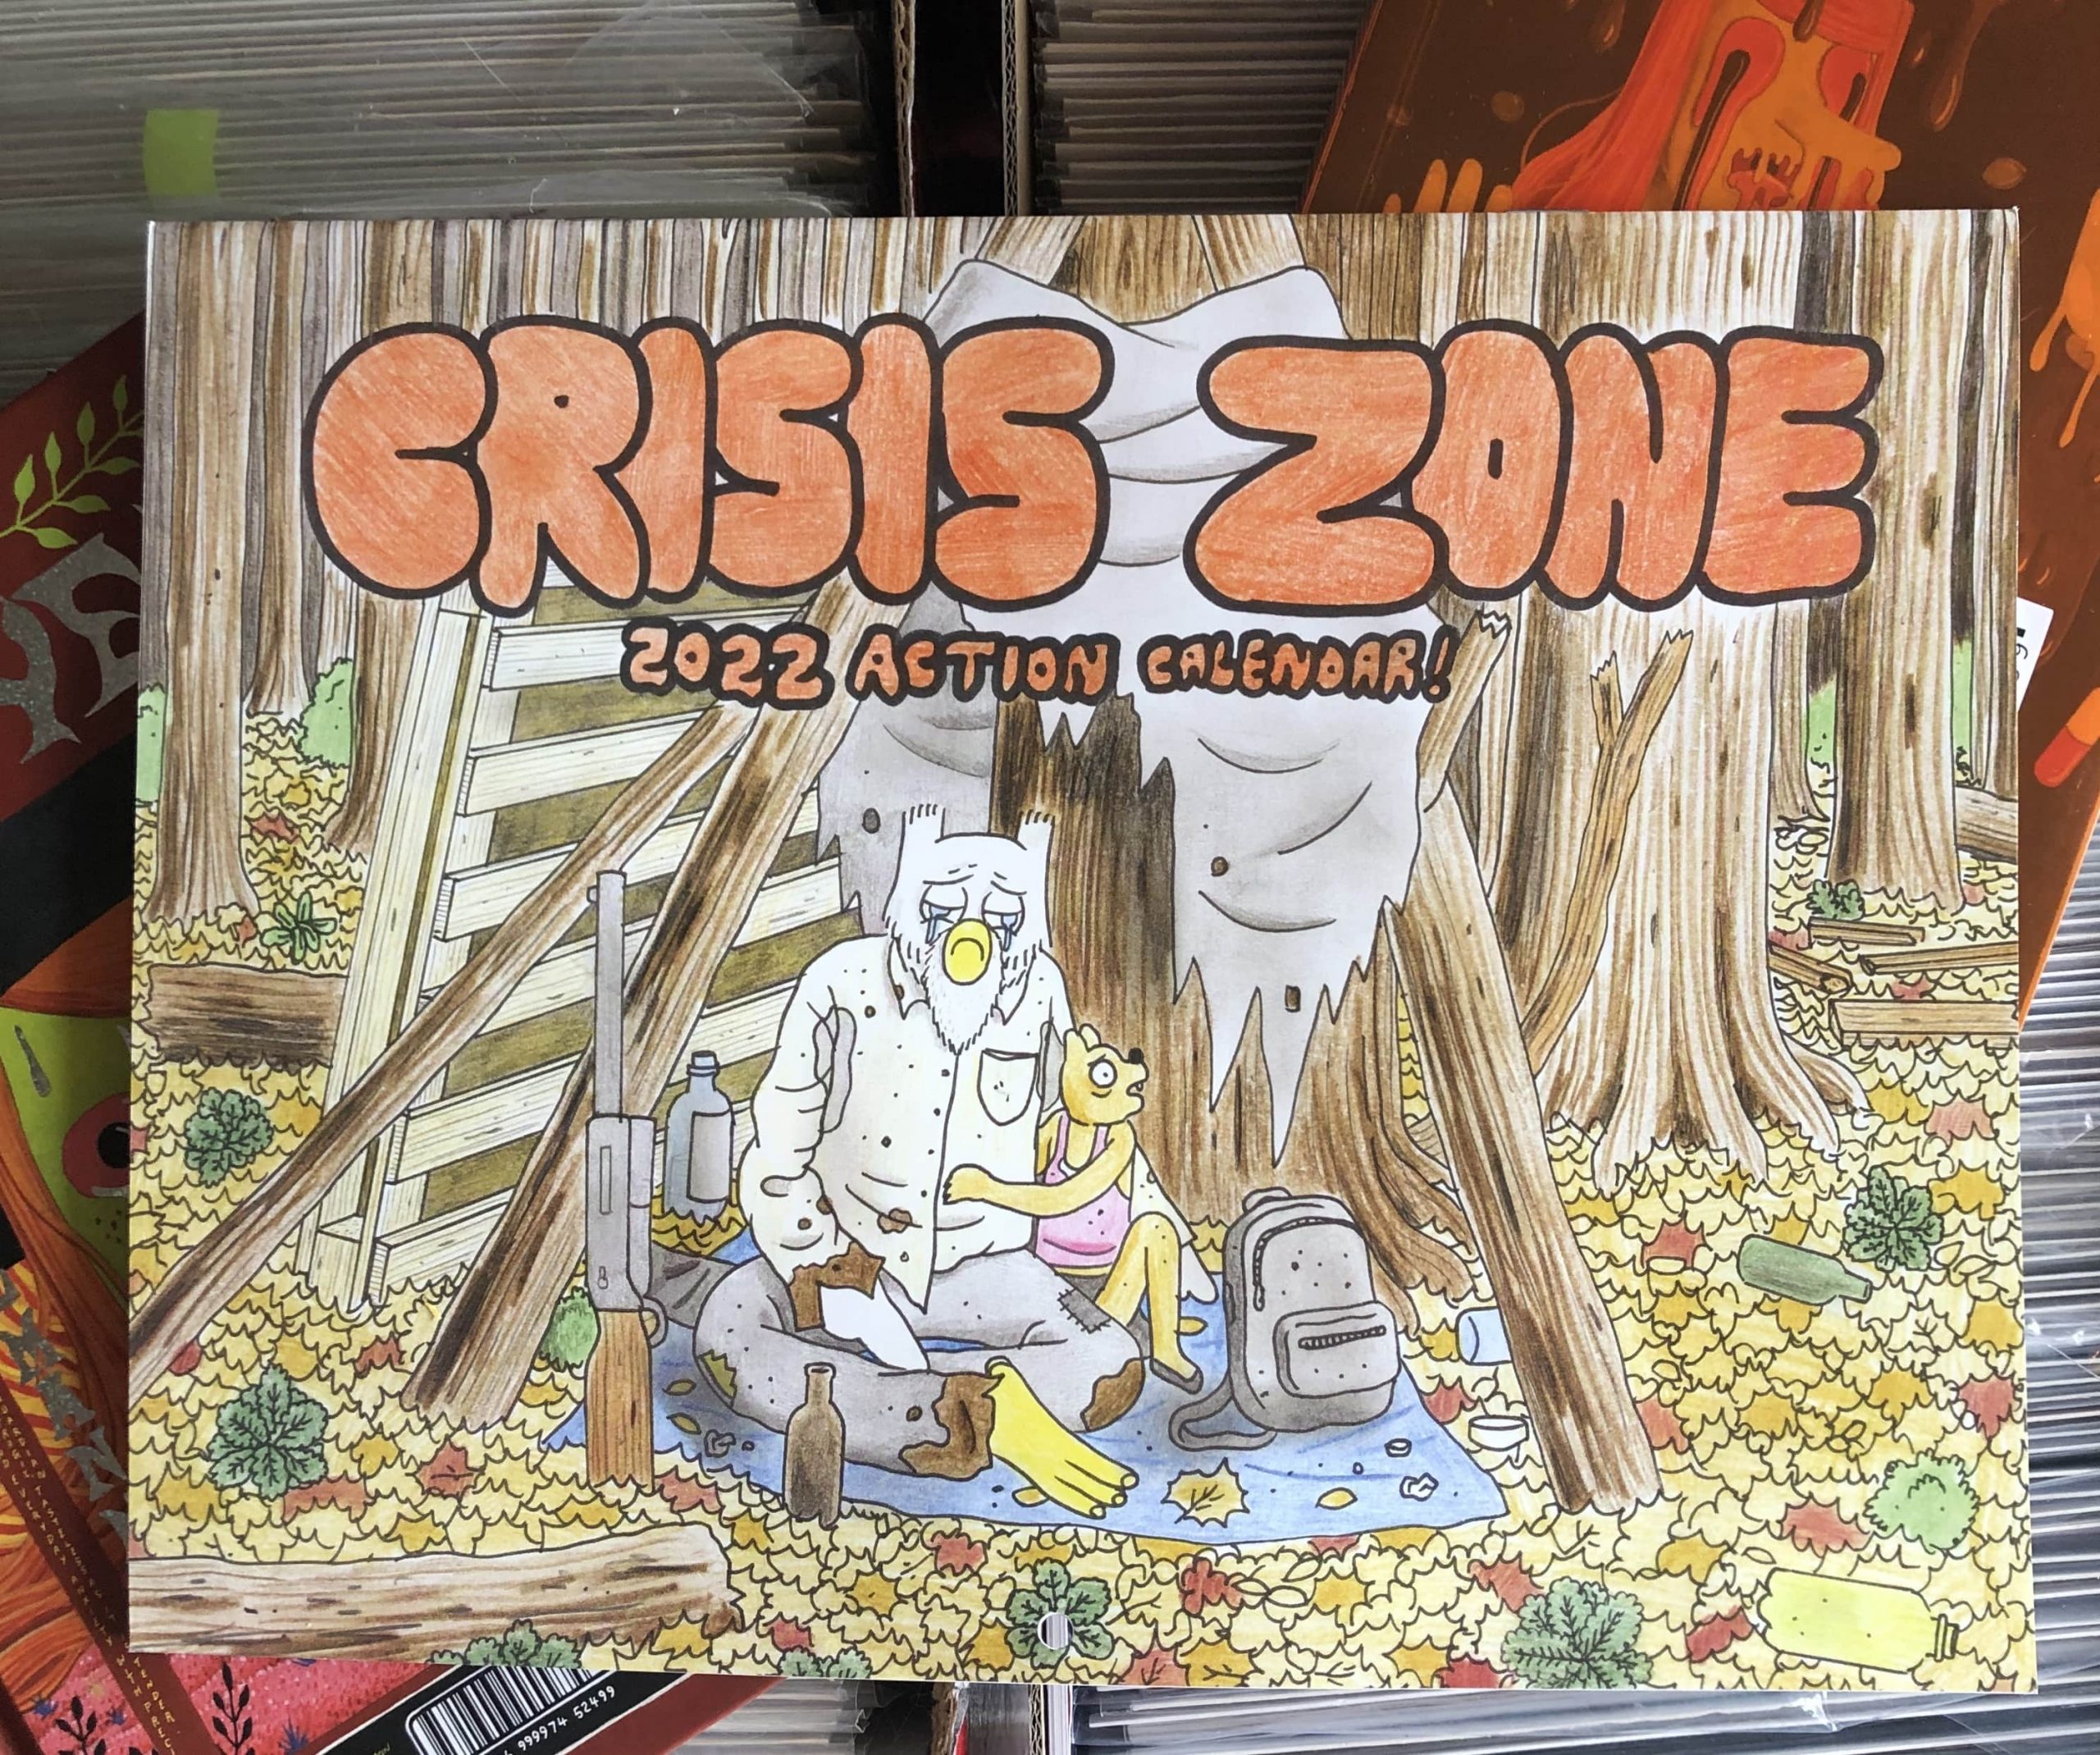 Crisis Zone